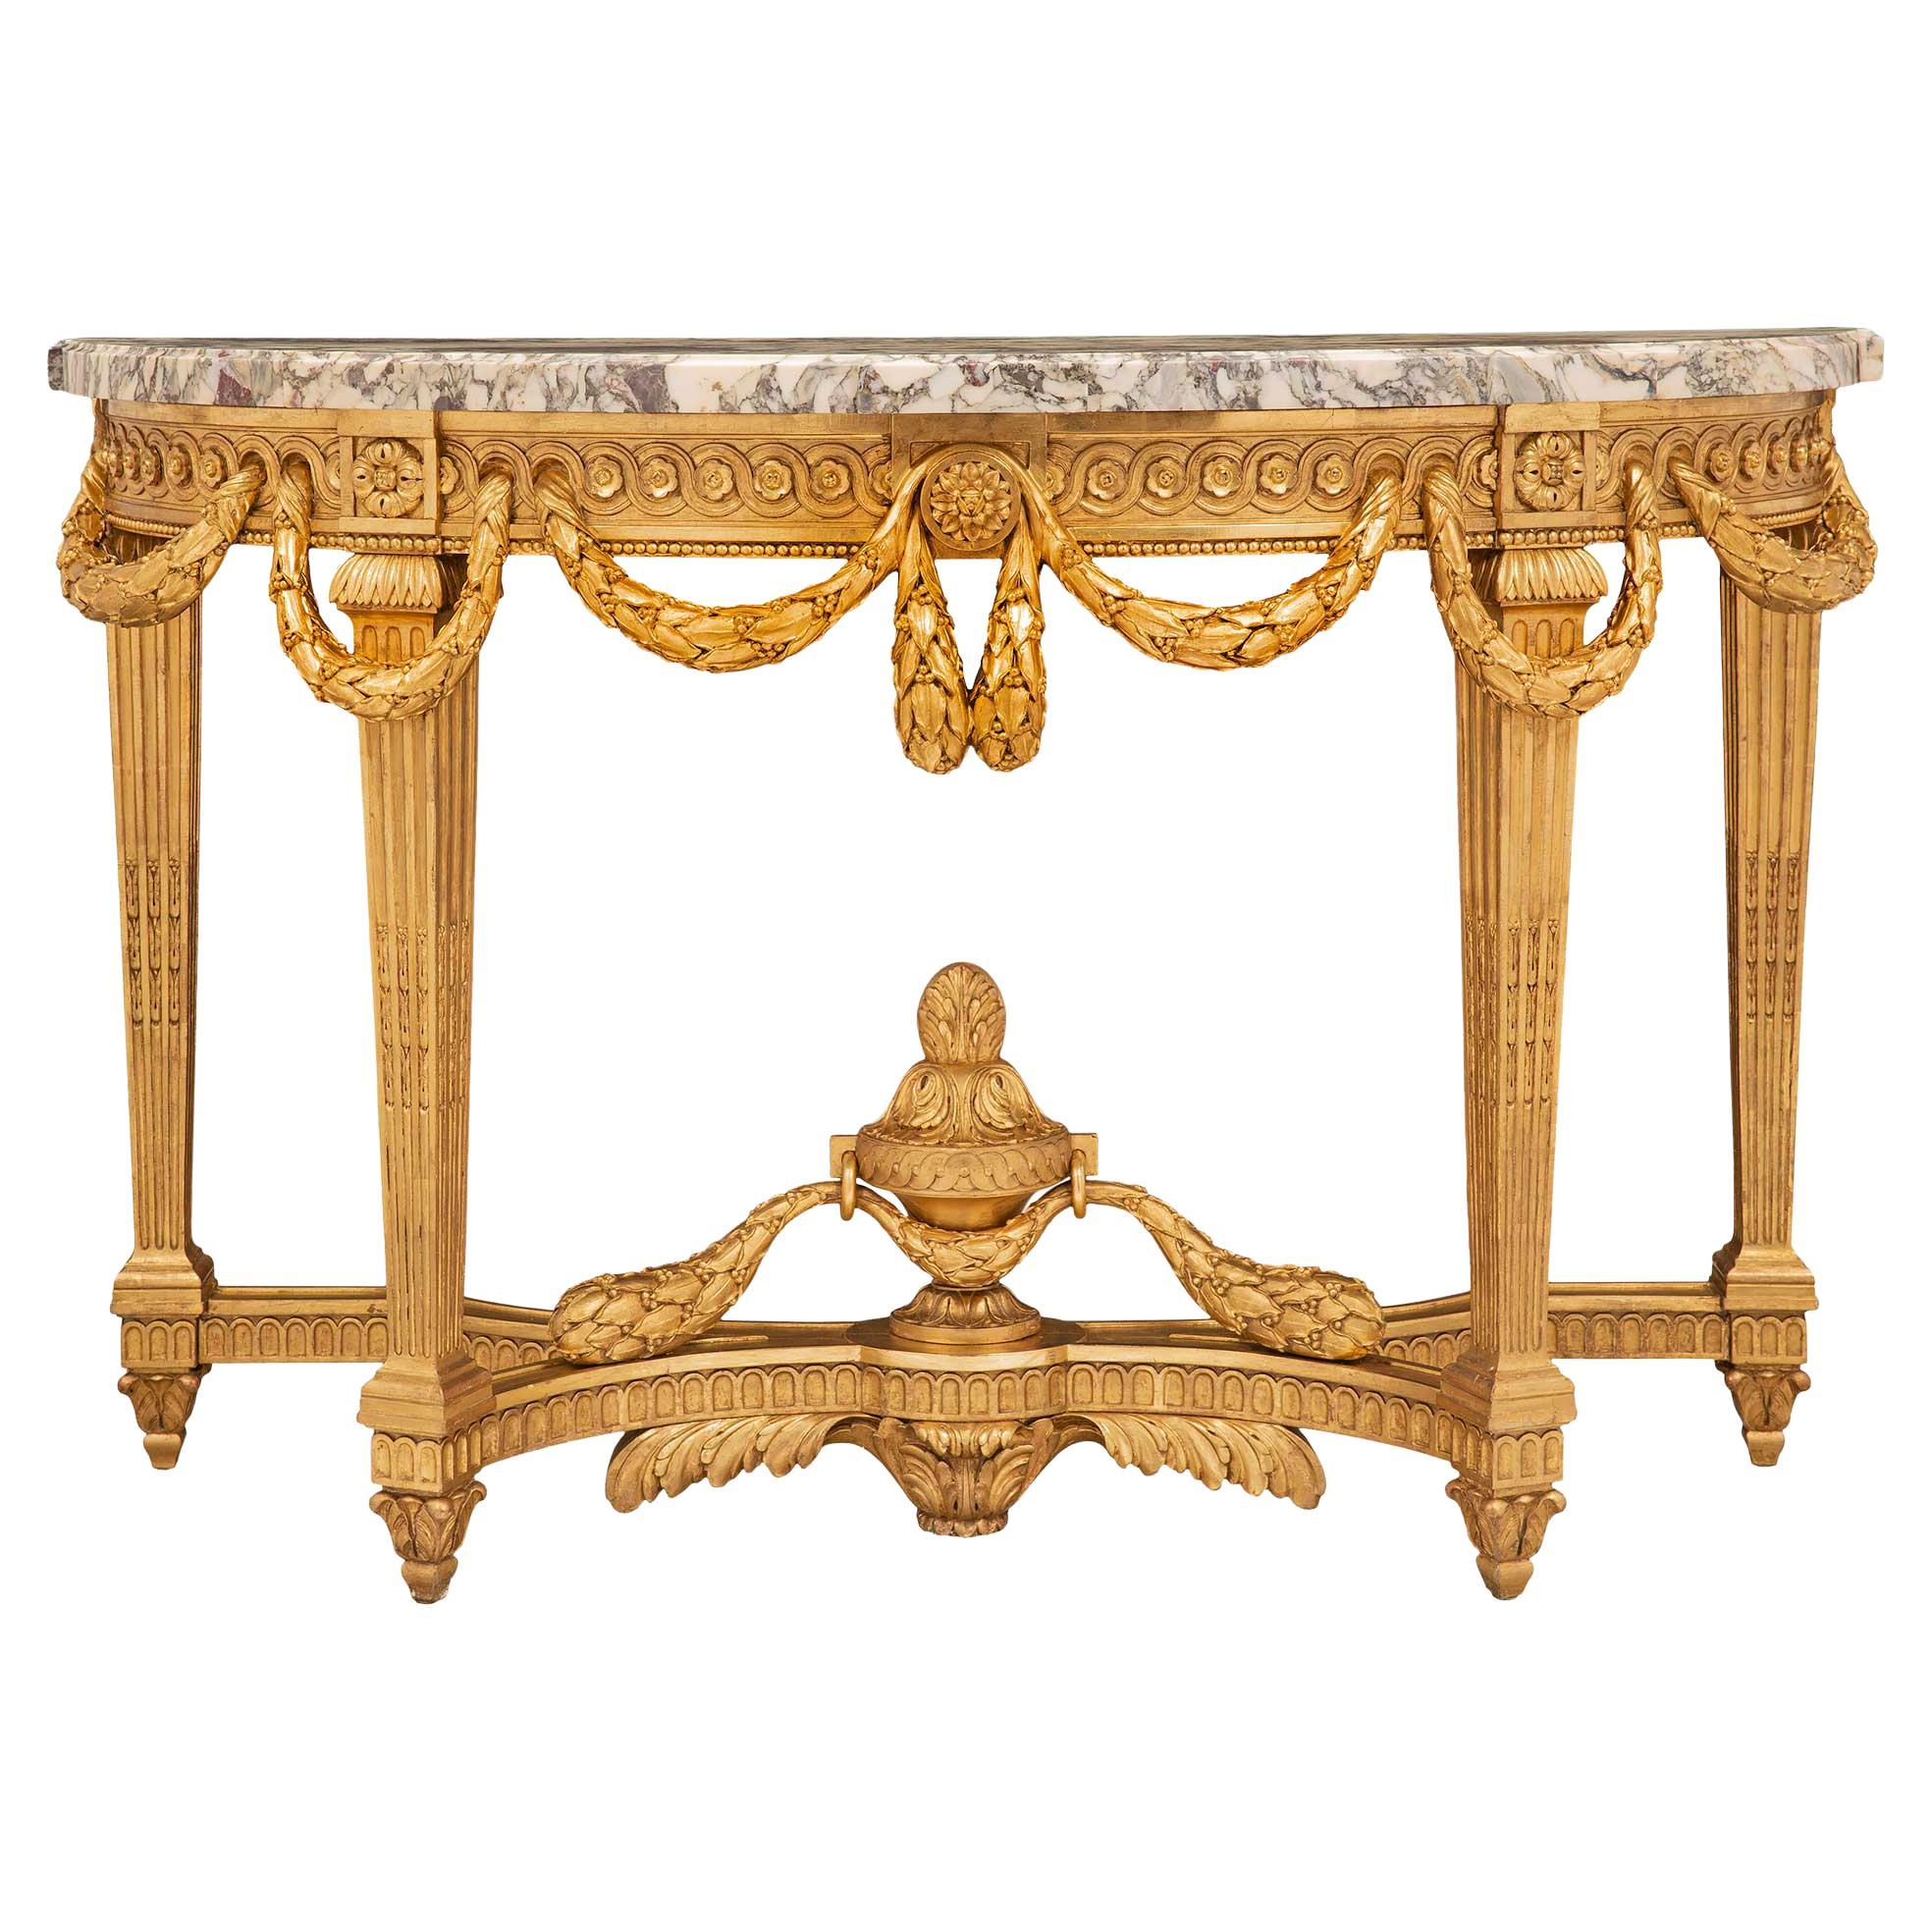 Konsole aus vergoldetem Holz und Fleur De Pcher-Marmor im Louis-XVI.-Stil des 19. Jahrhunderts